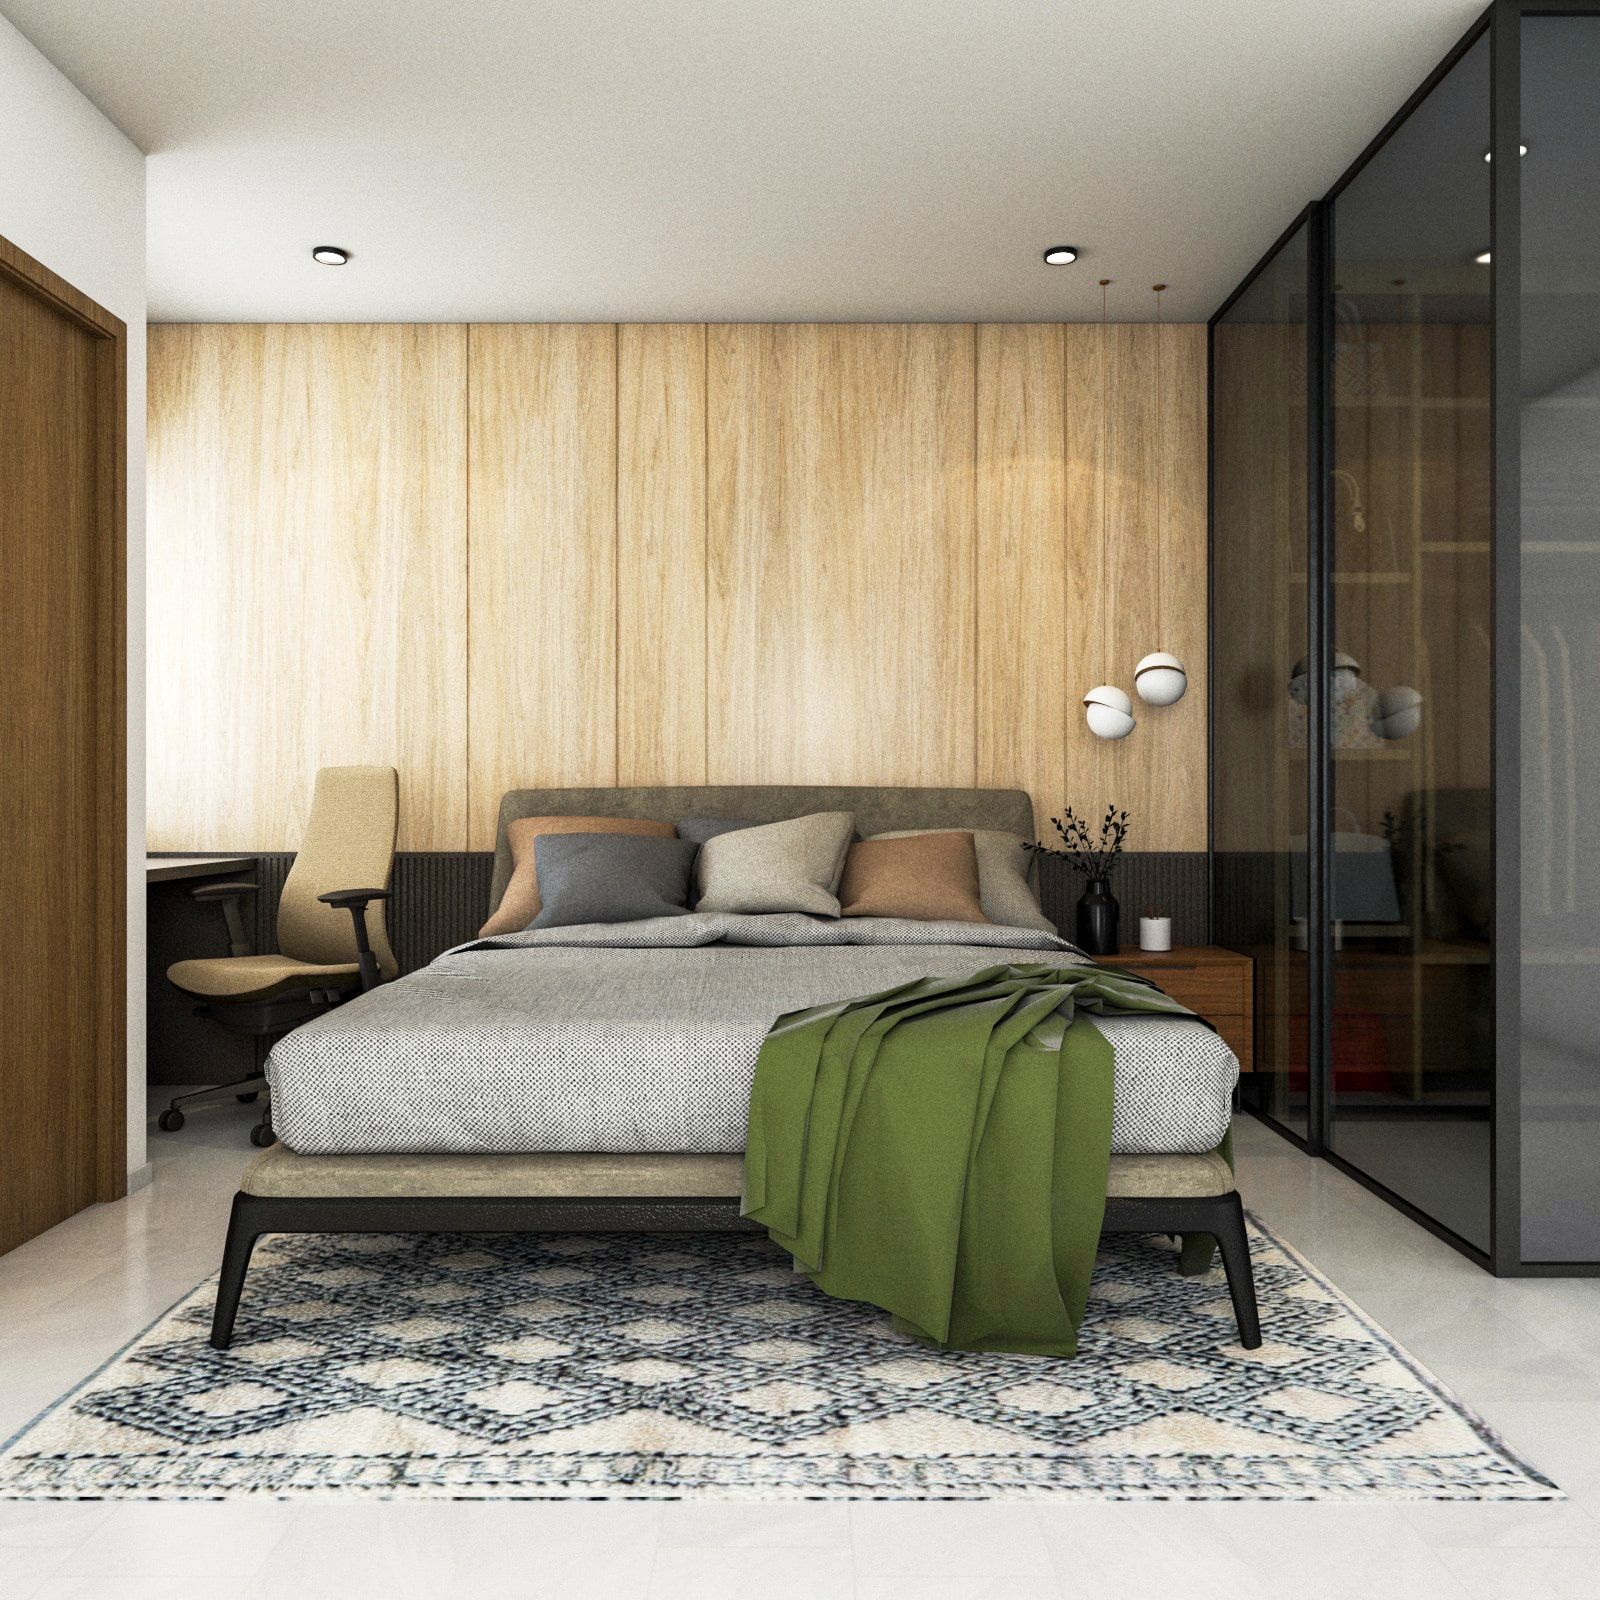 Modern Master Bedroom Design With Glass Sliding Wardrobe